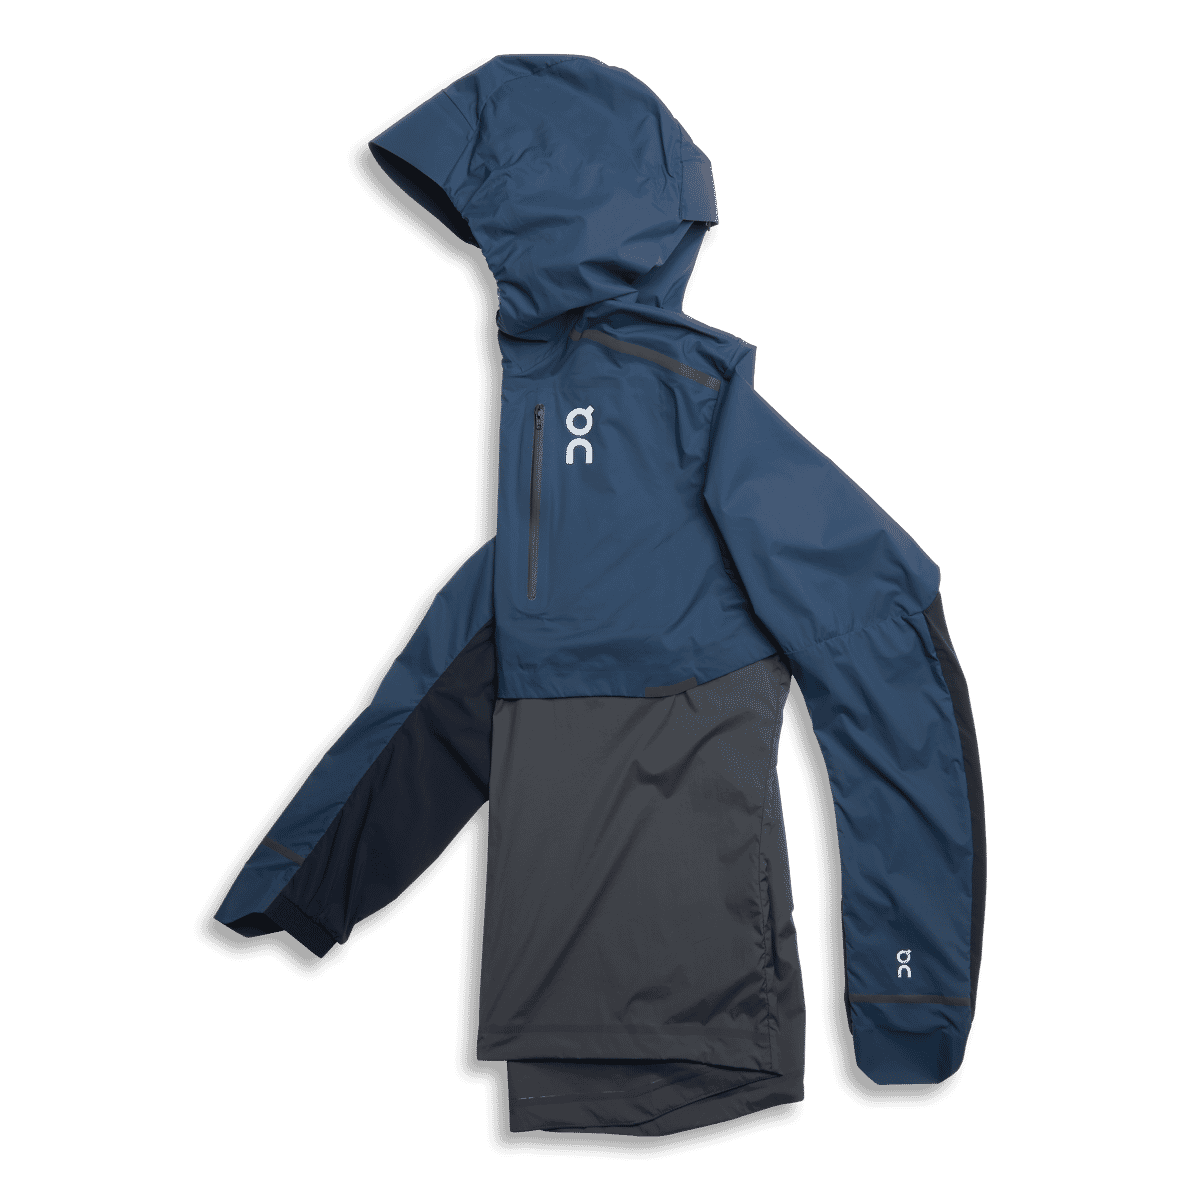 Weather Jacket - Weatherproof Running Jacket | On